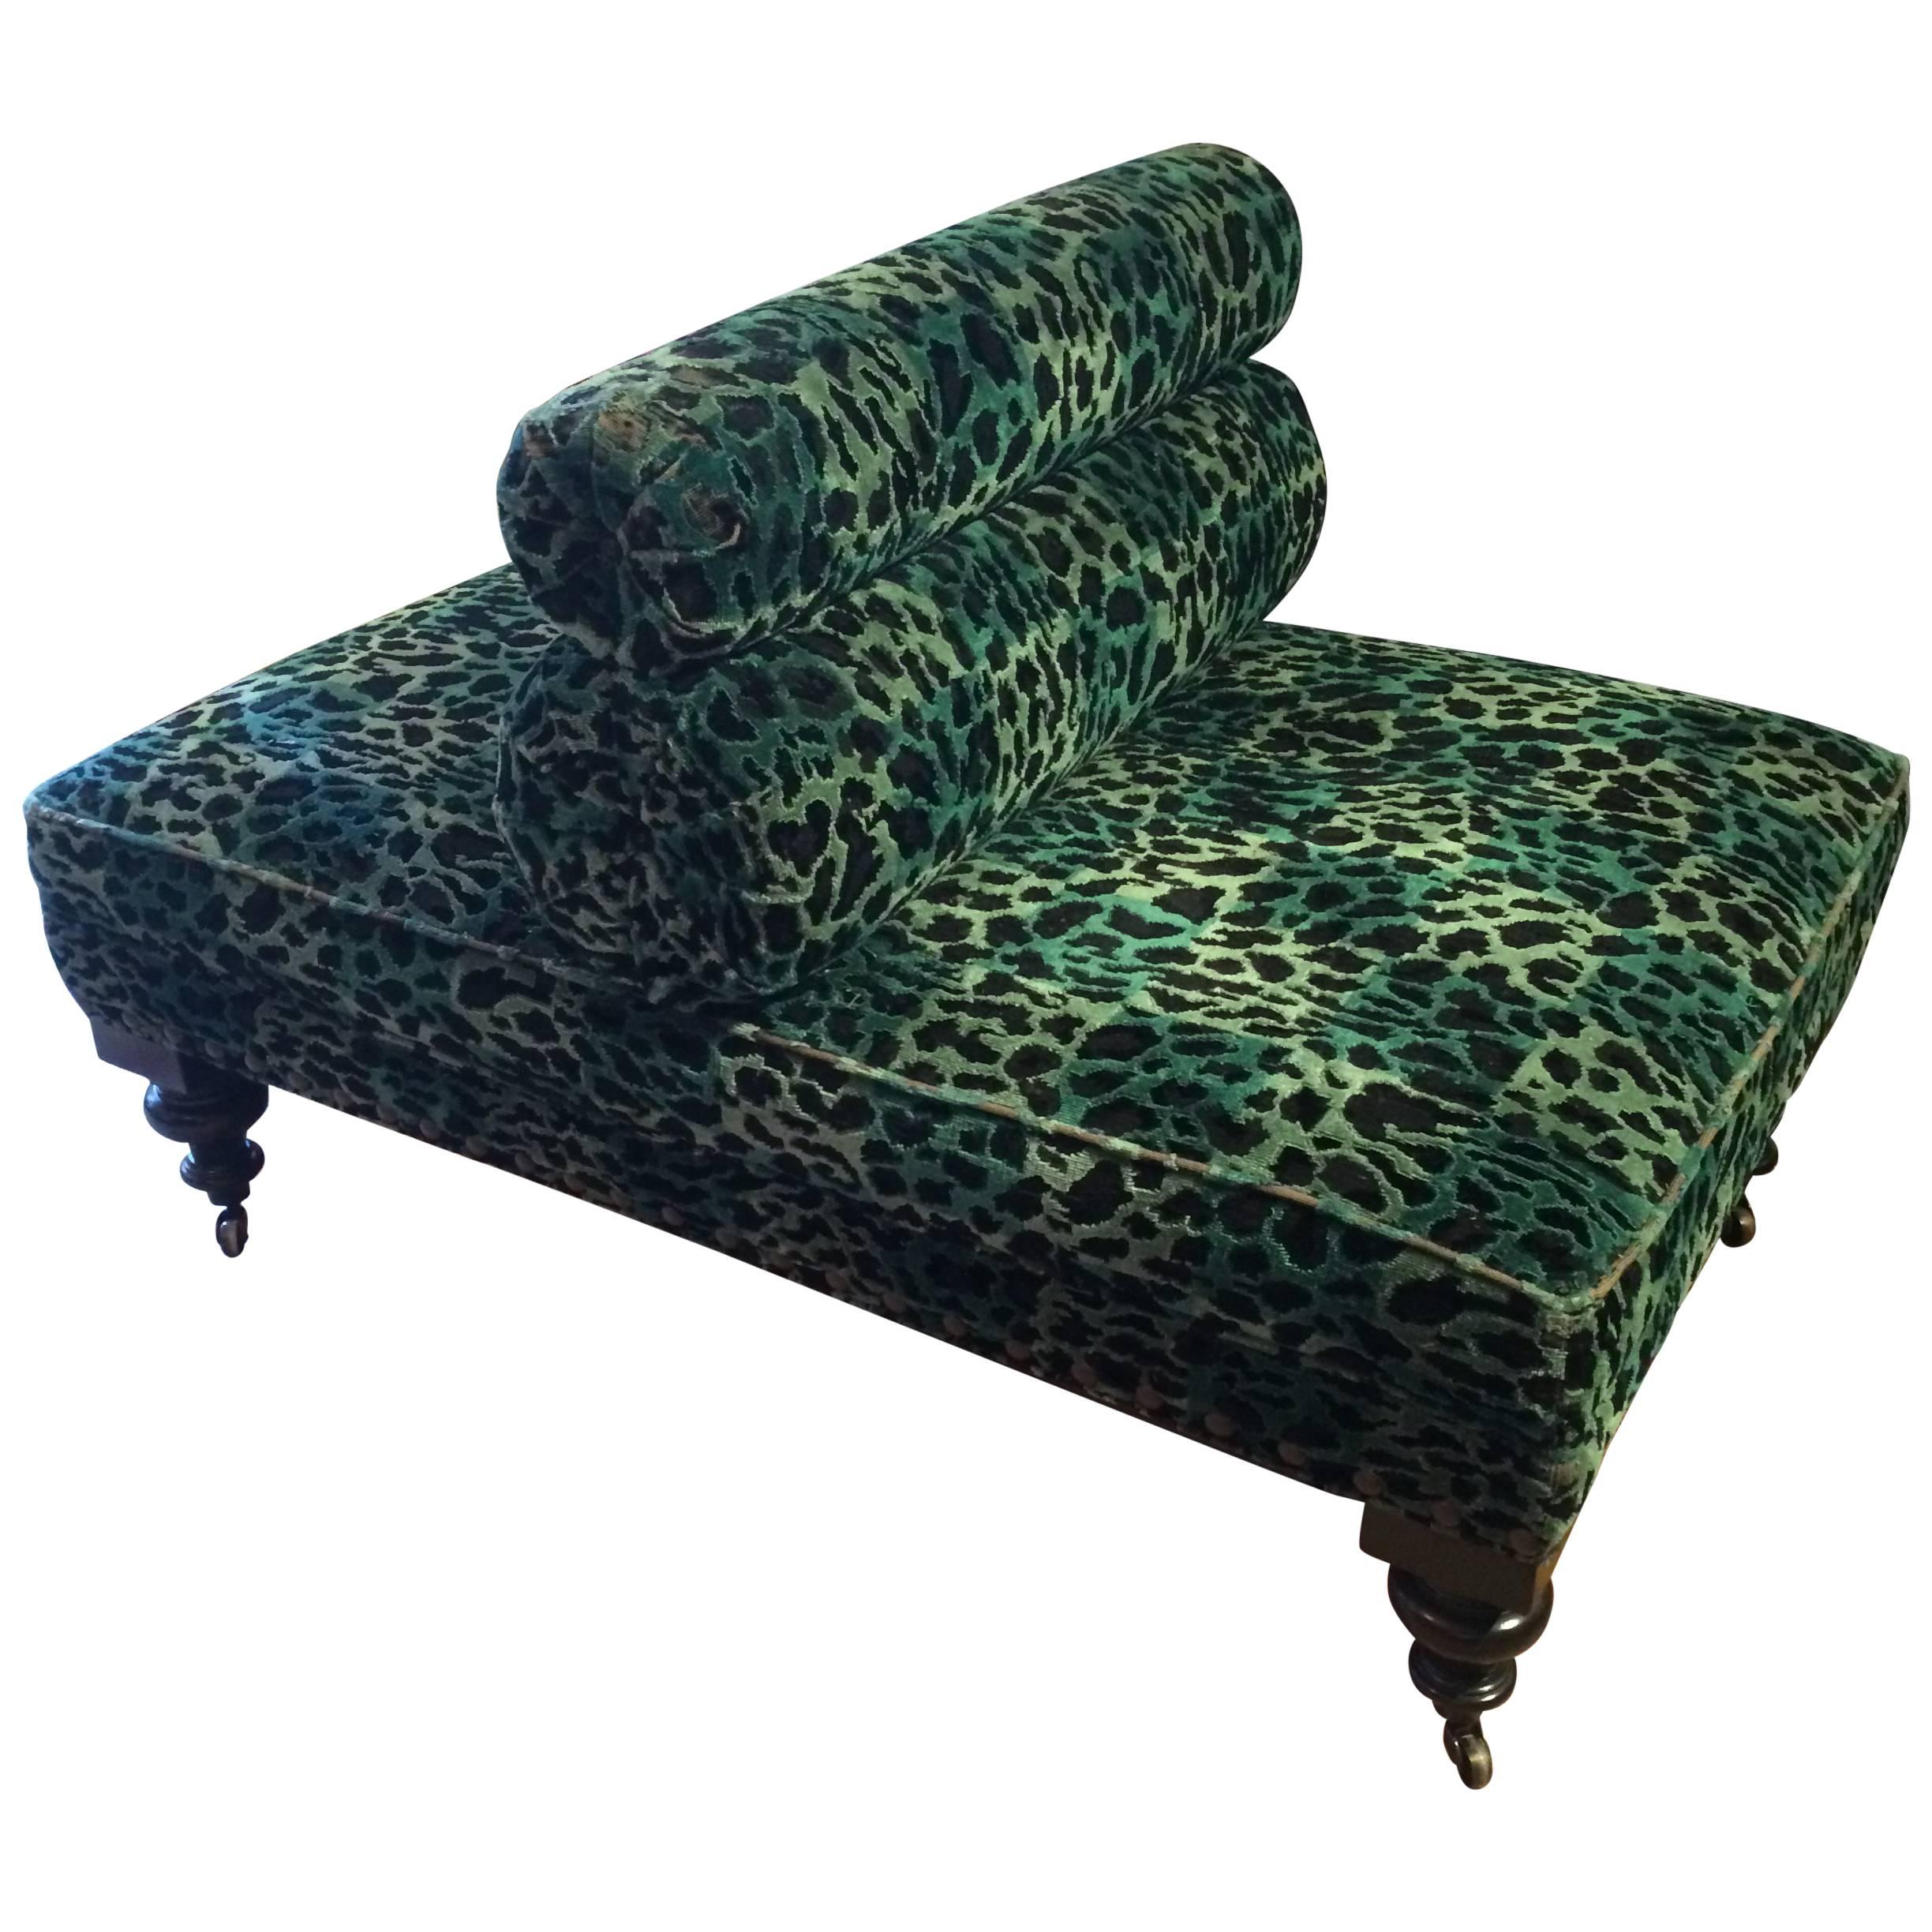 Fabulous Upholstered Animal Print Back to Back Chair